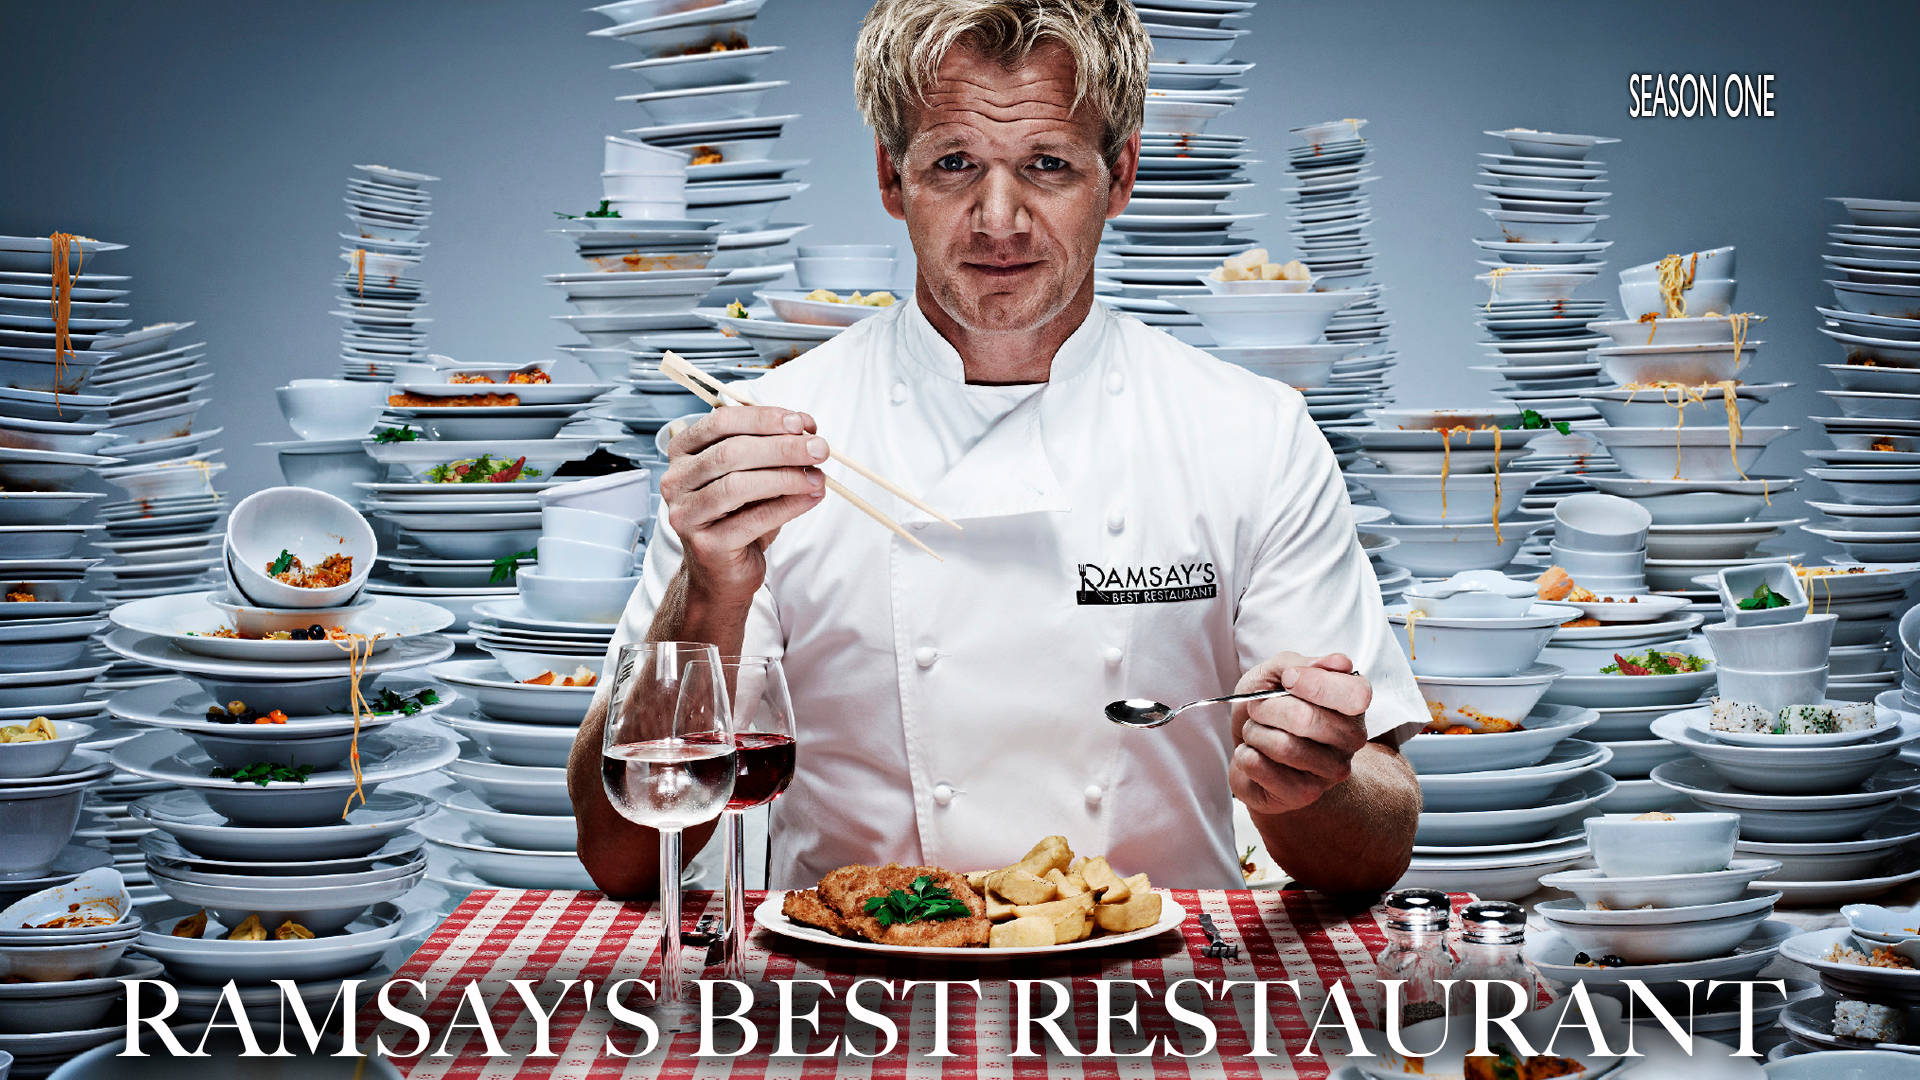 Gordon Ramsay Best Restaurant Background